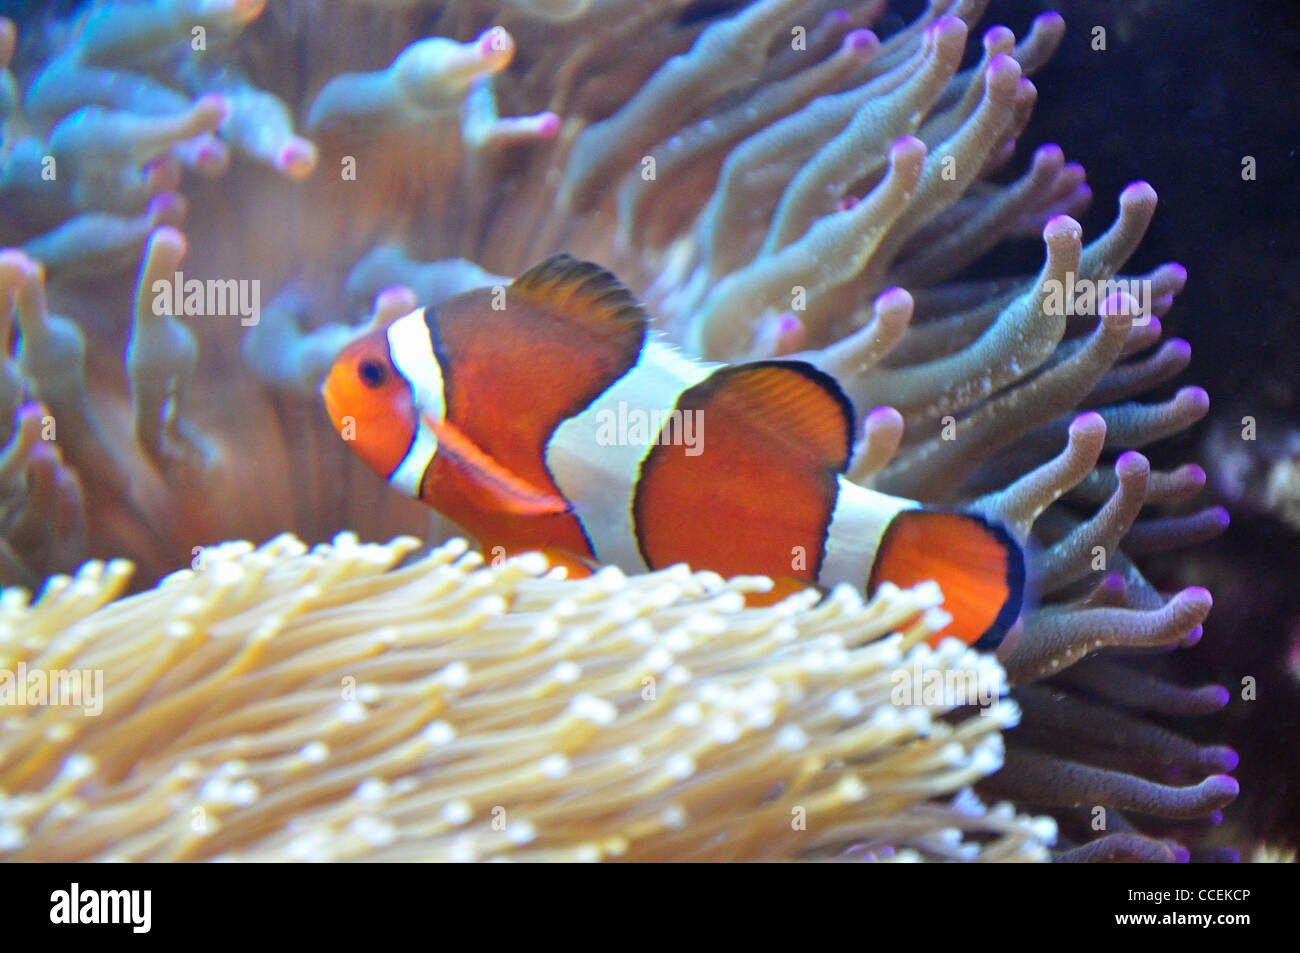 Ocellaris Clownfish amongst sea anemones in aquarium, Surrey, England, United Kingdom Stock Photo